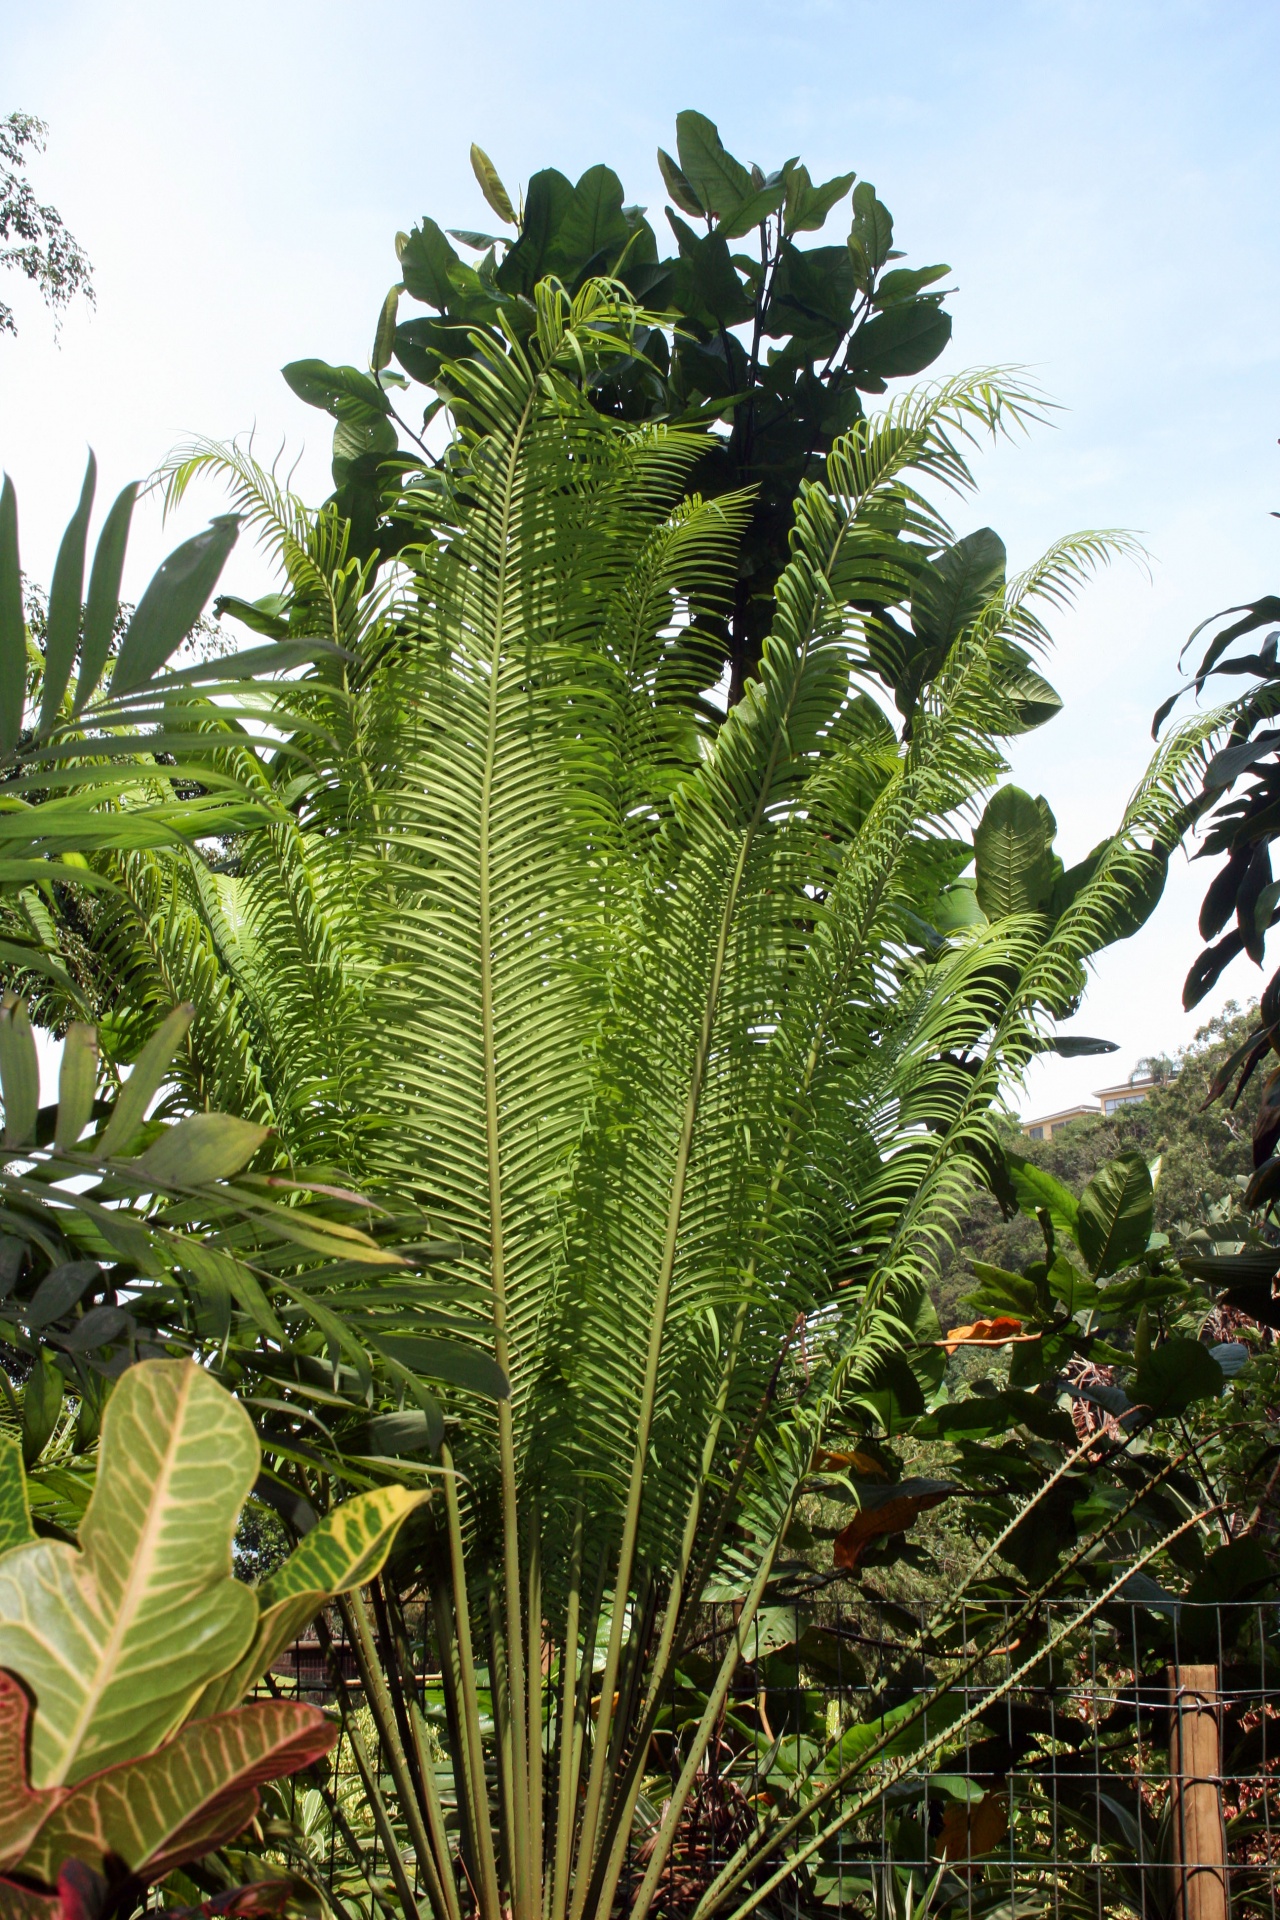 Cycad e outras plantas subtropicais